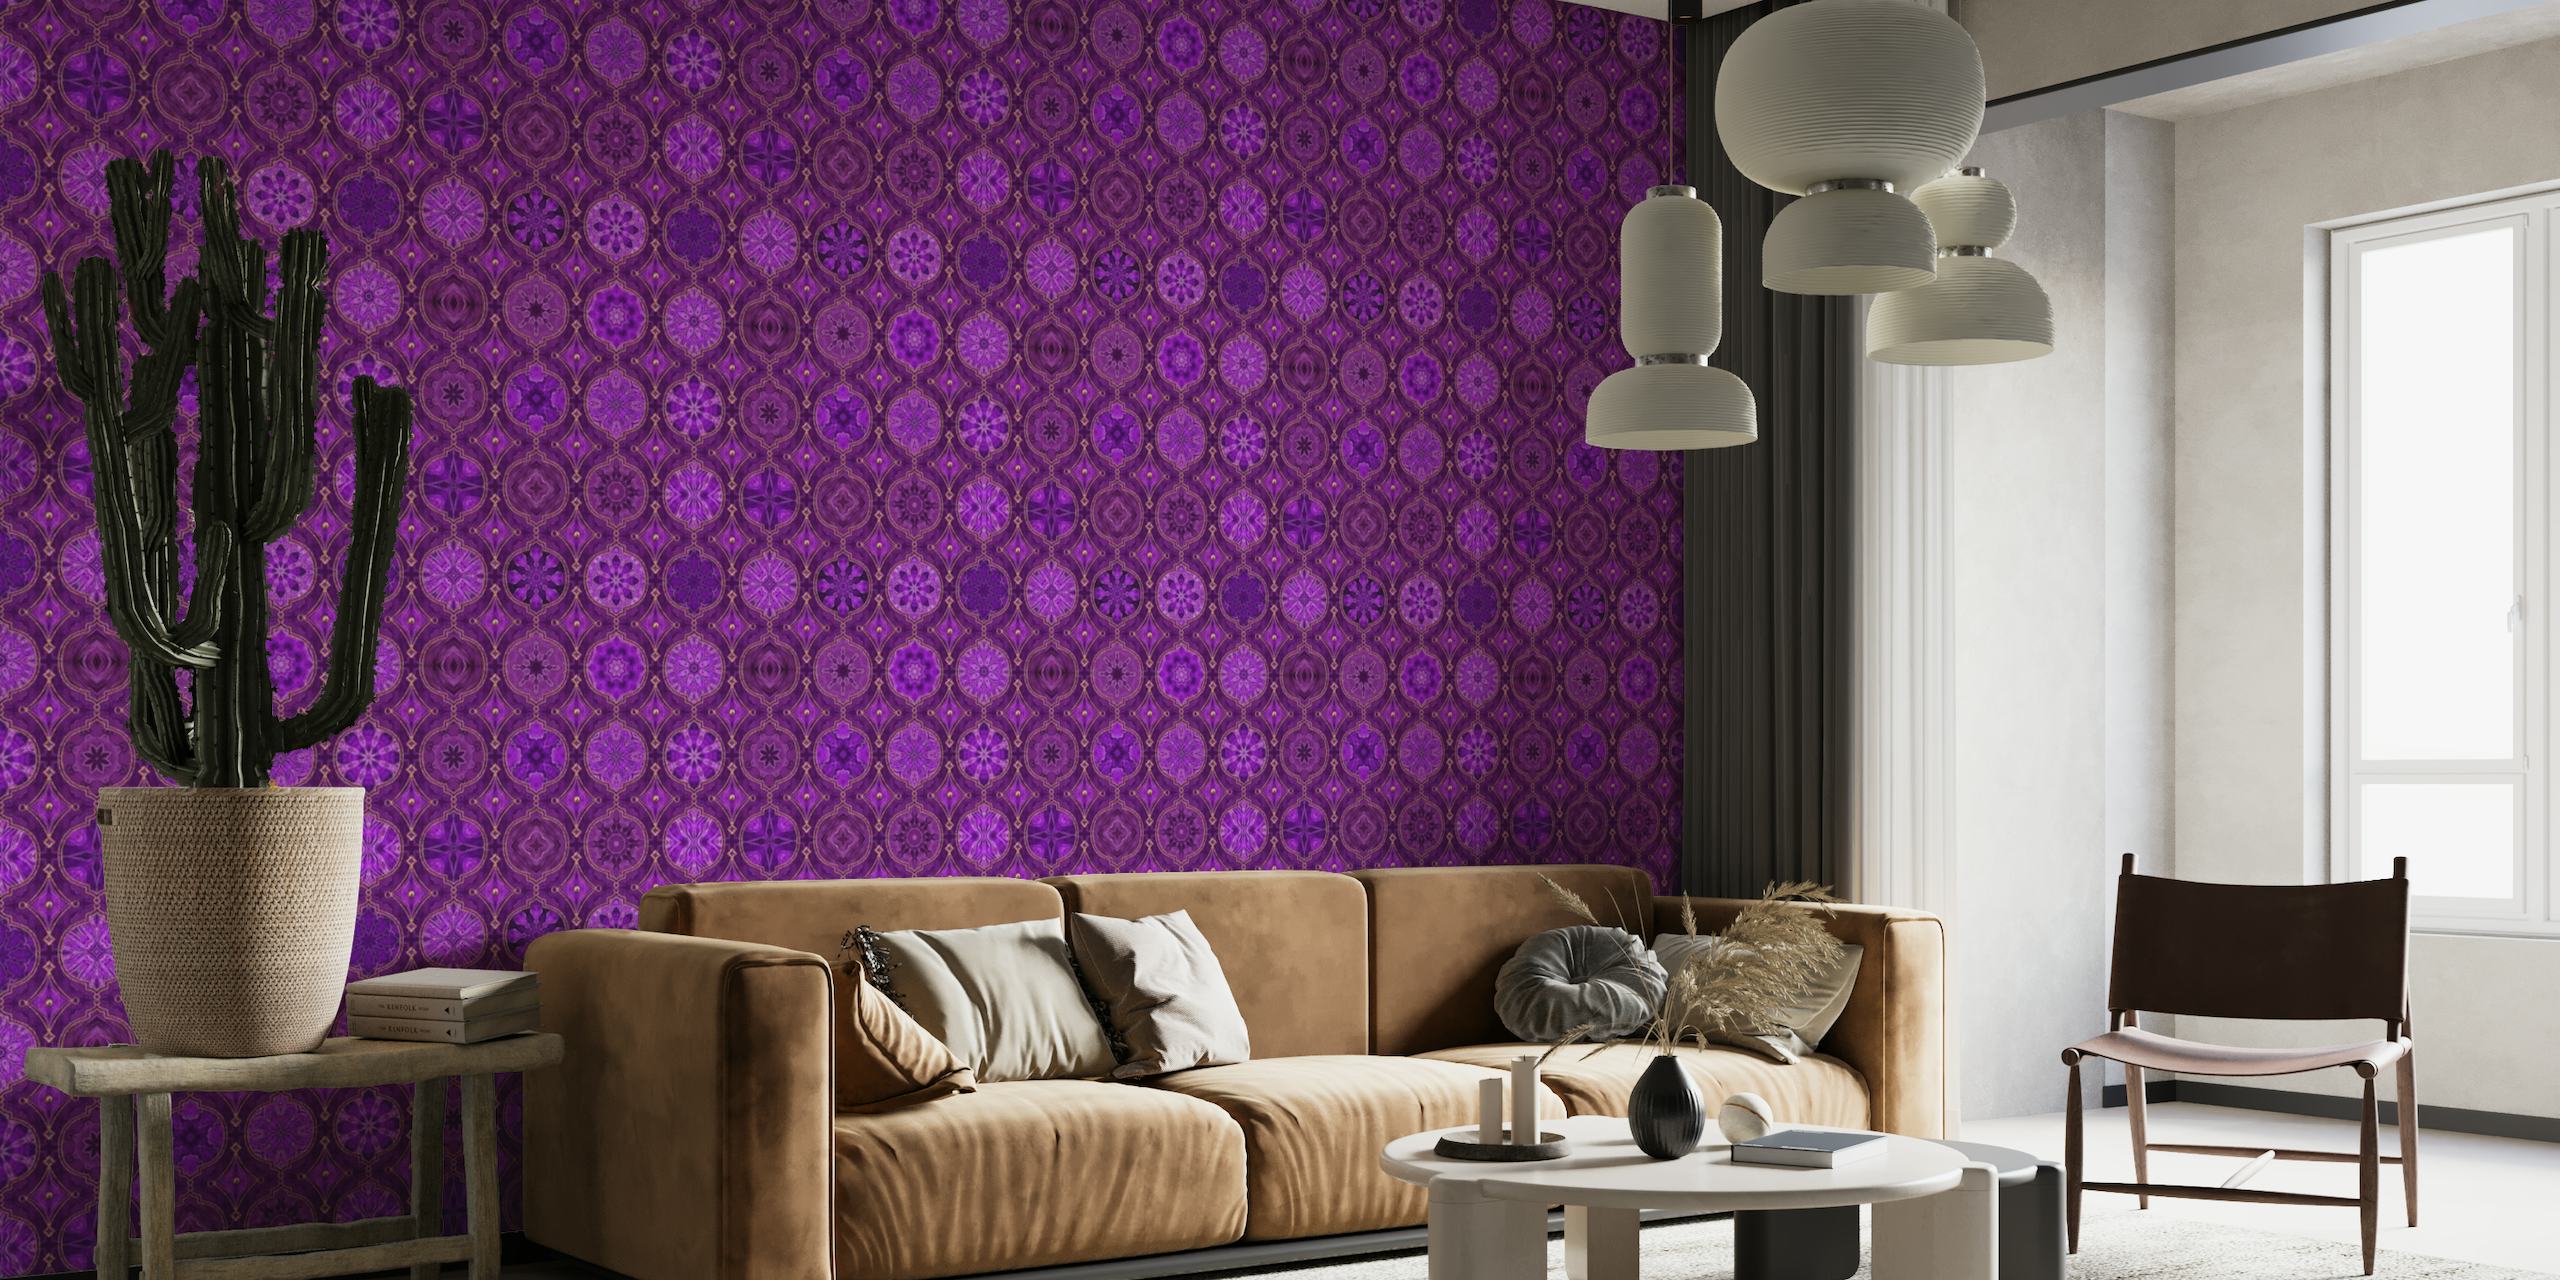 Treasures of Morocco Oriental Tile Design Fuchsia Purple Gold tapetit